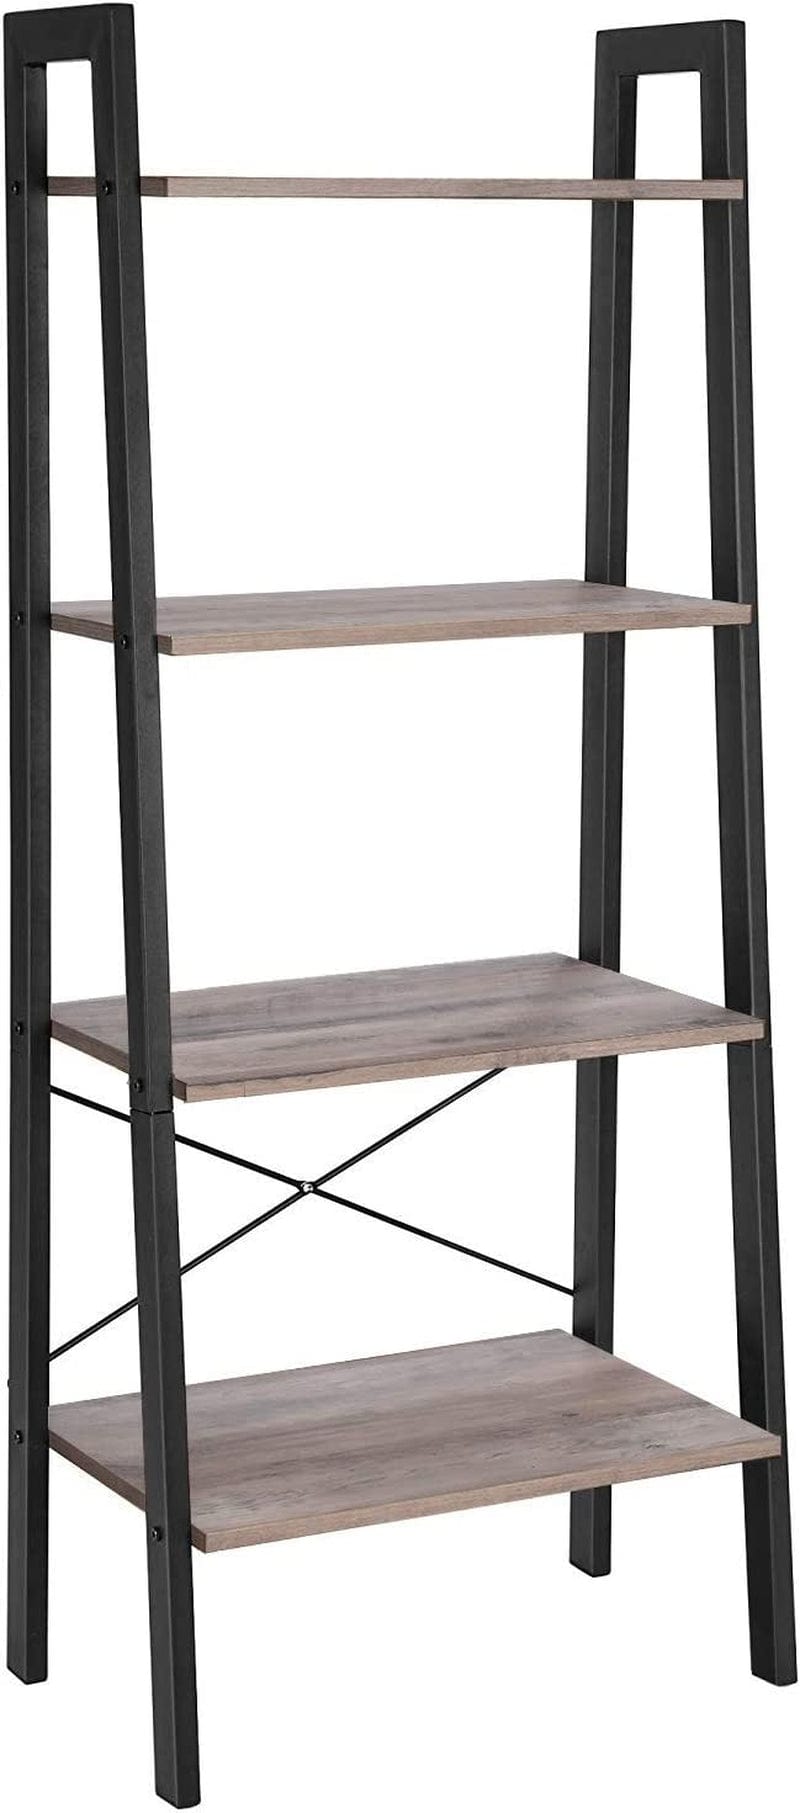 VASAGLE Ladder Shelf, 4-Tier Bookshelf, Storage Rack, Bookcase with Steel Frame, for Living Room, Home Office, Kitchen, Bedroom, Industrial Style, Rustic Brown and Black ULLS44X